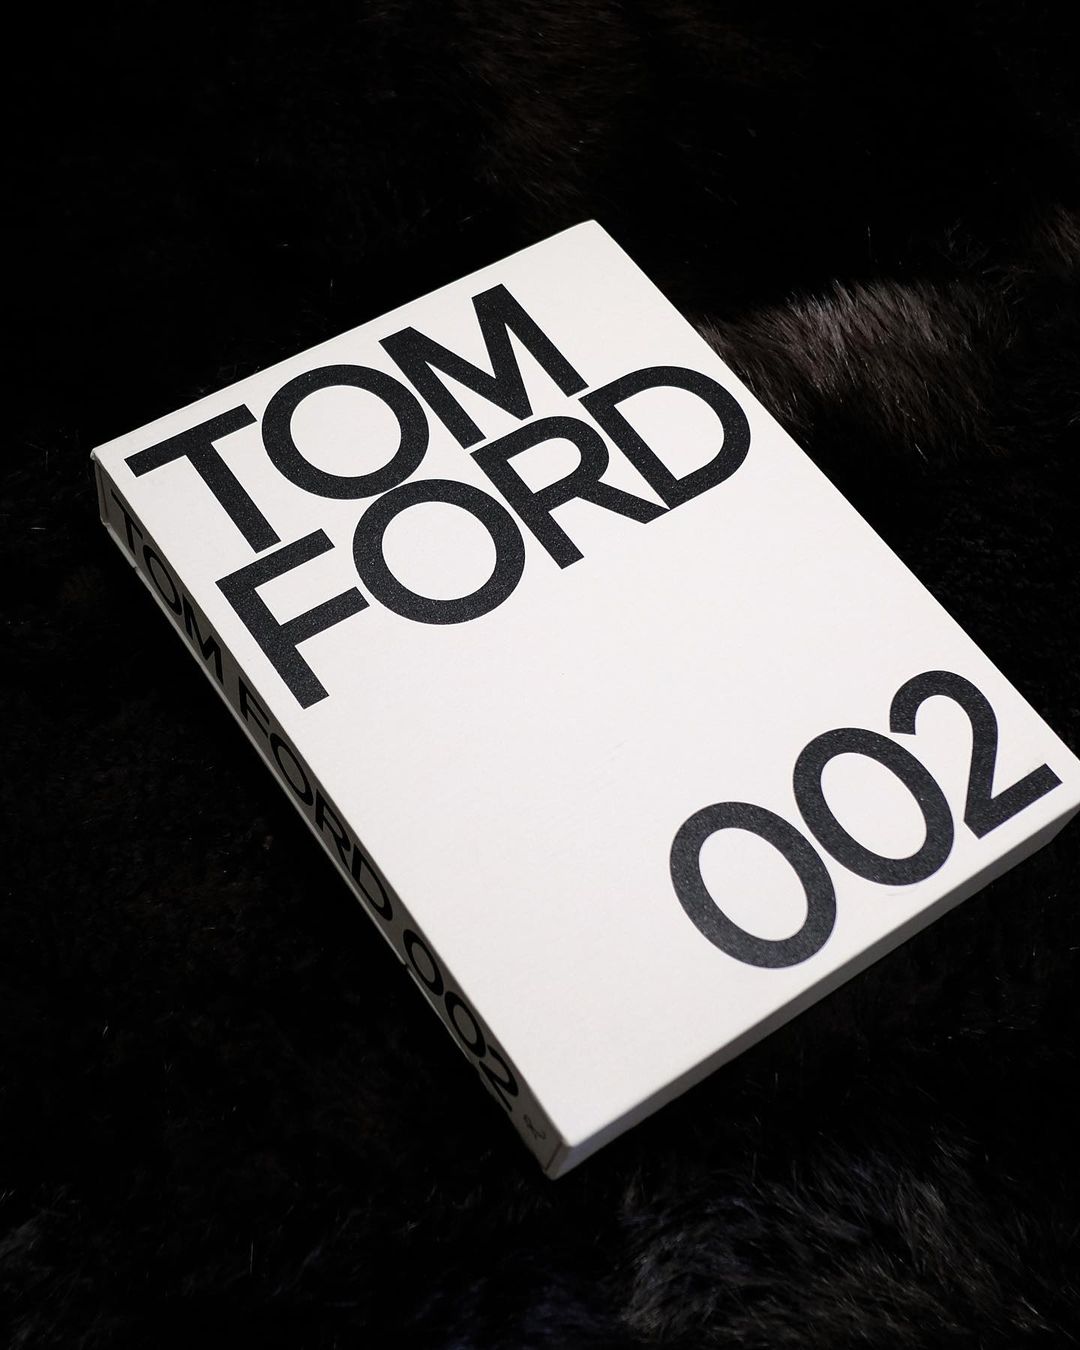 Tom Ford 出版第二部自传：只有当我有机会回到过去时，我才会明白未来该如何走